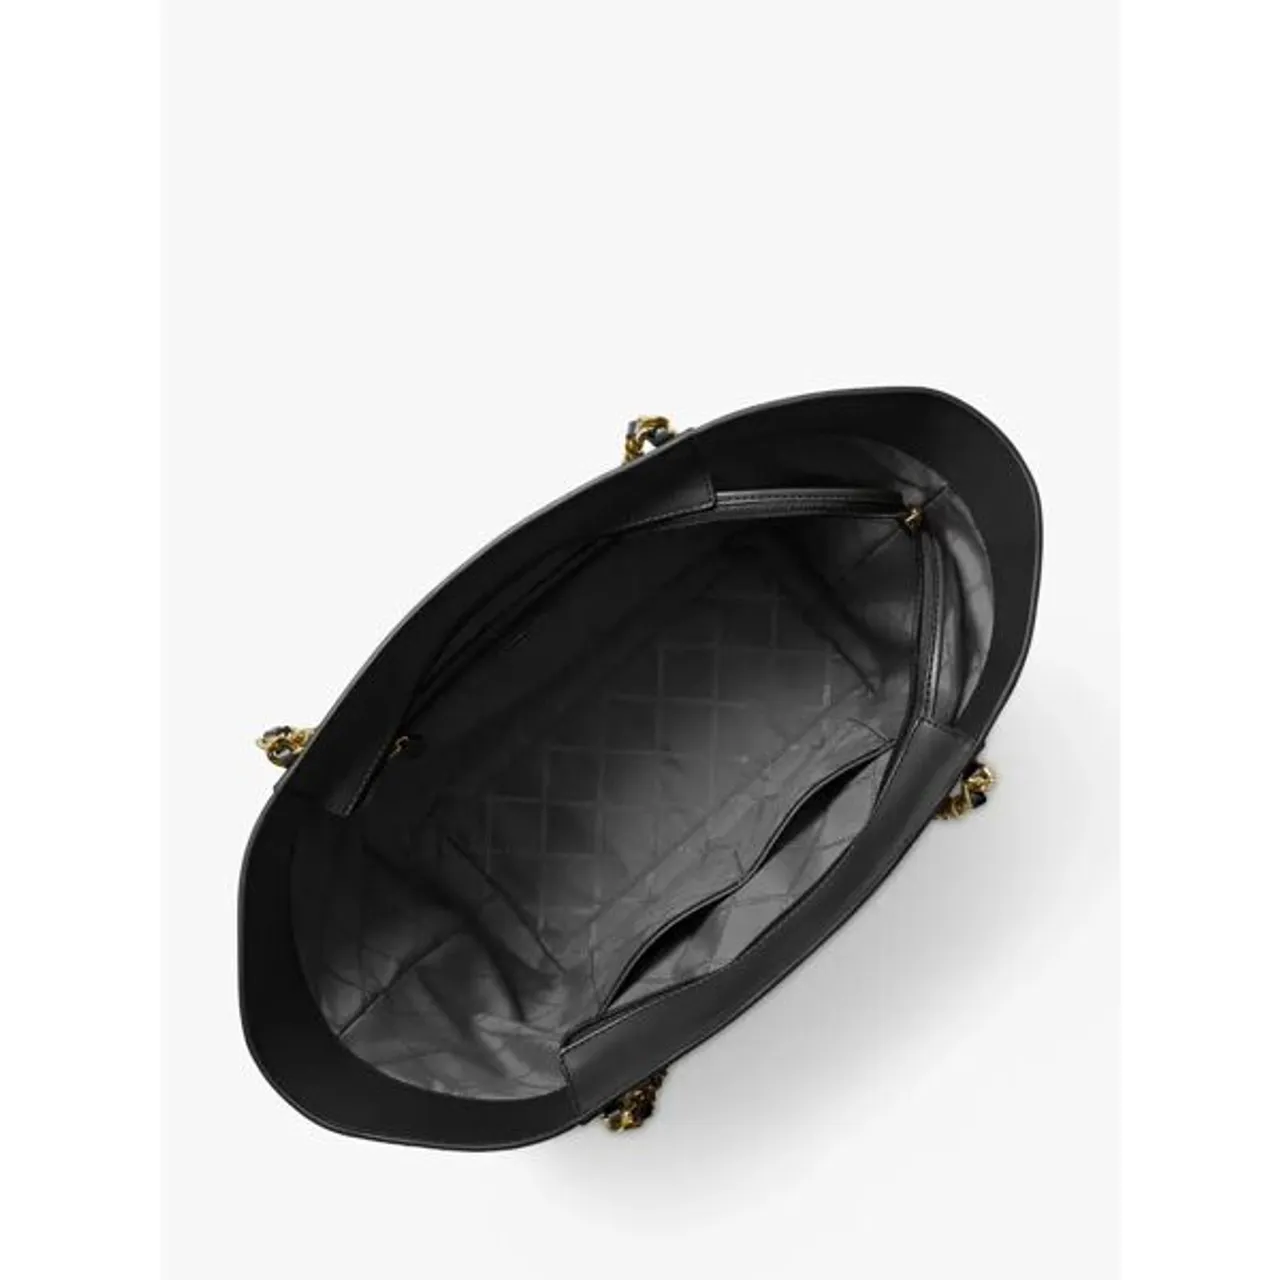 Michael Kors Westley Large Pebbled Leather Chain-Link Tote Bag, Black - Black - Female